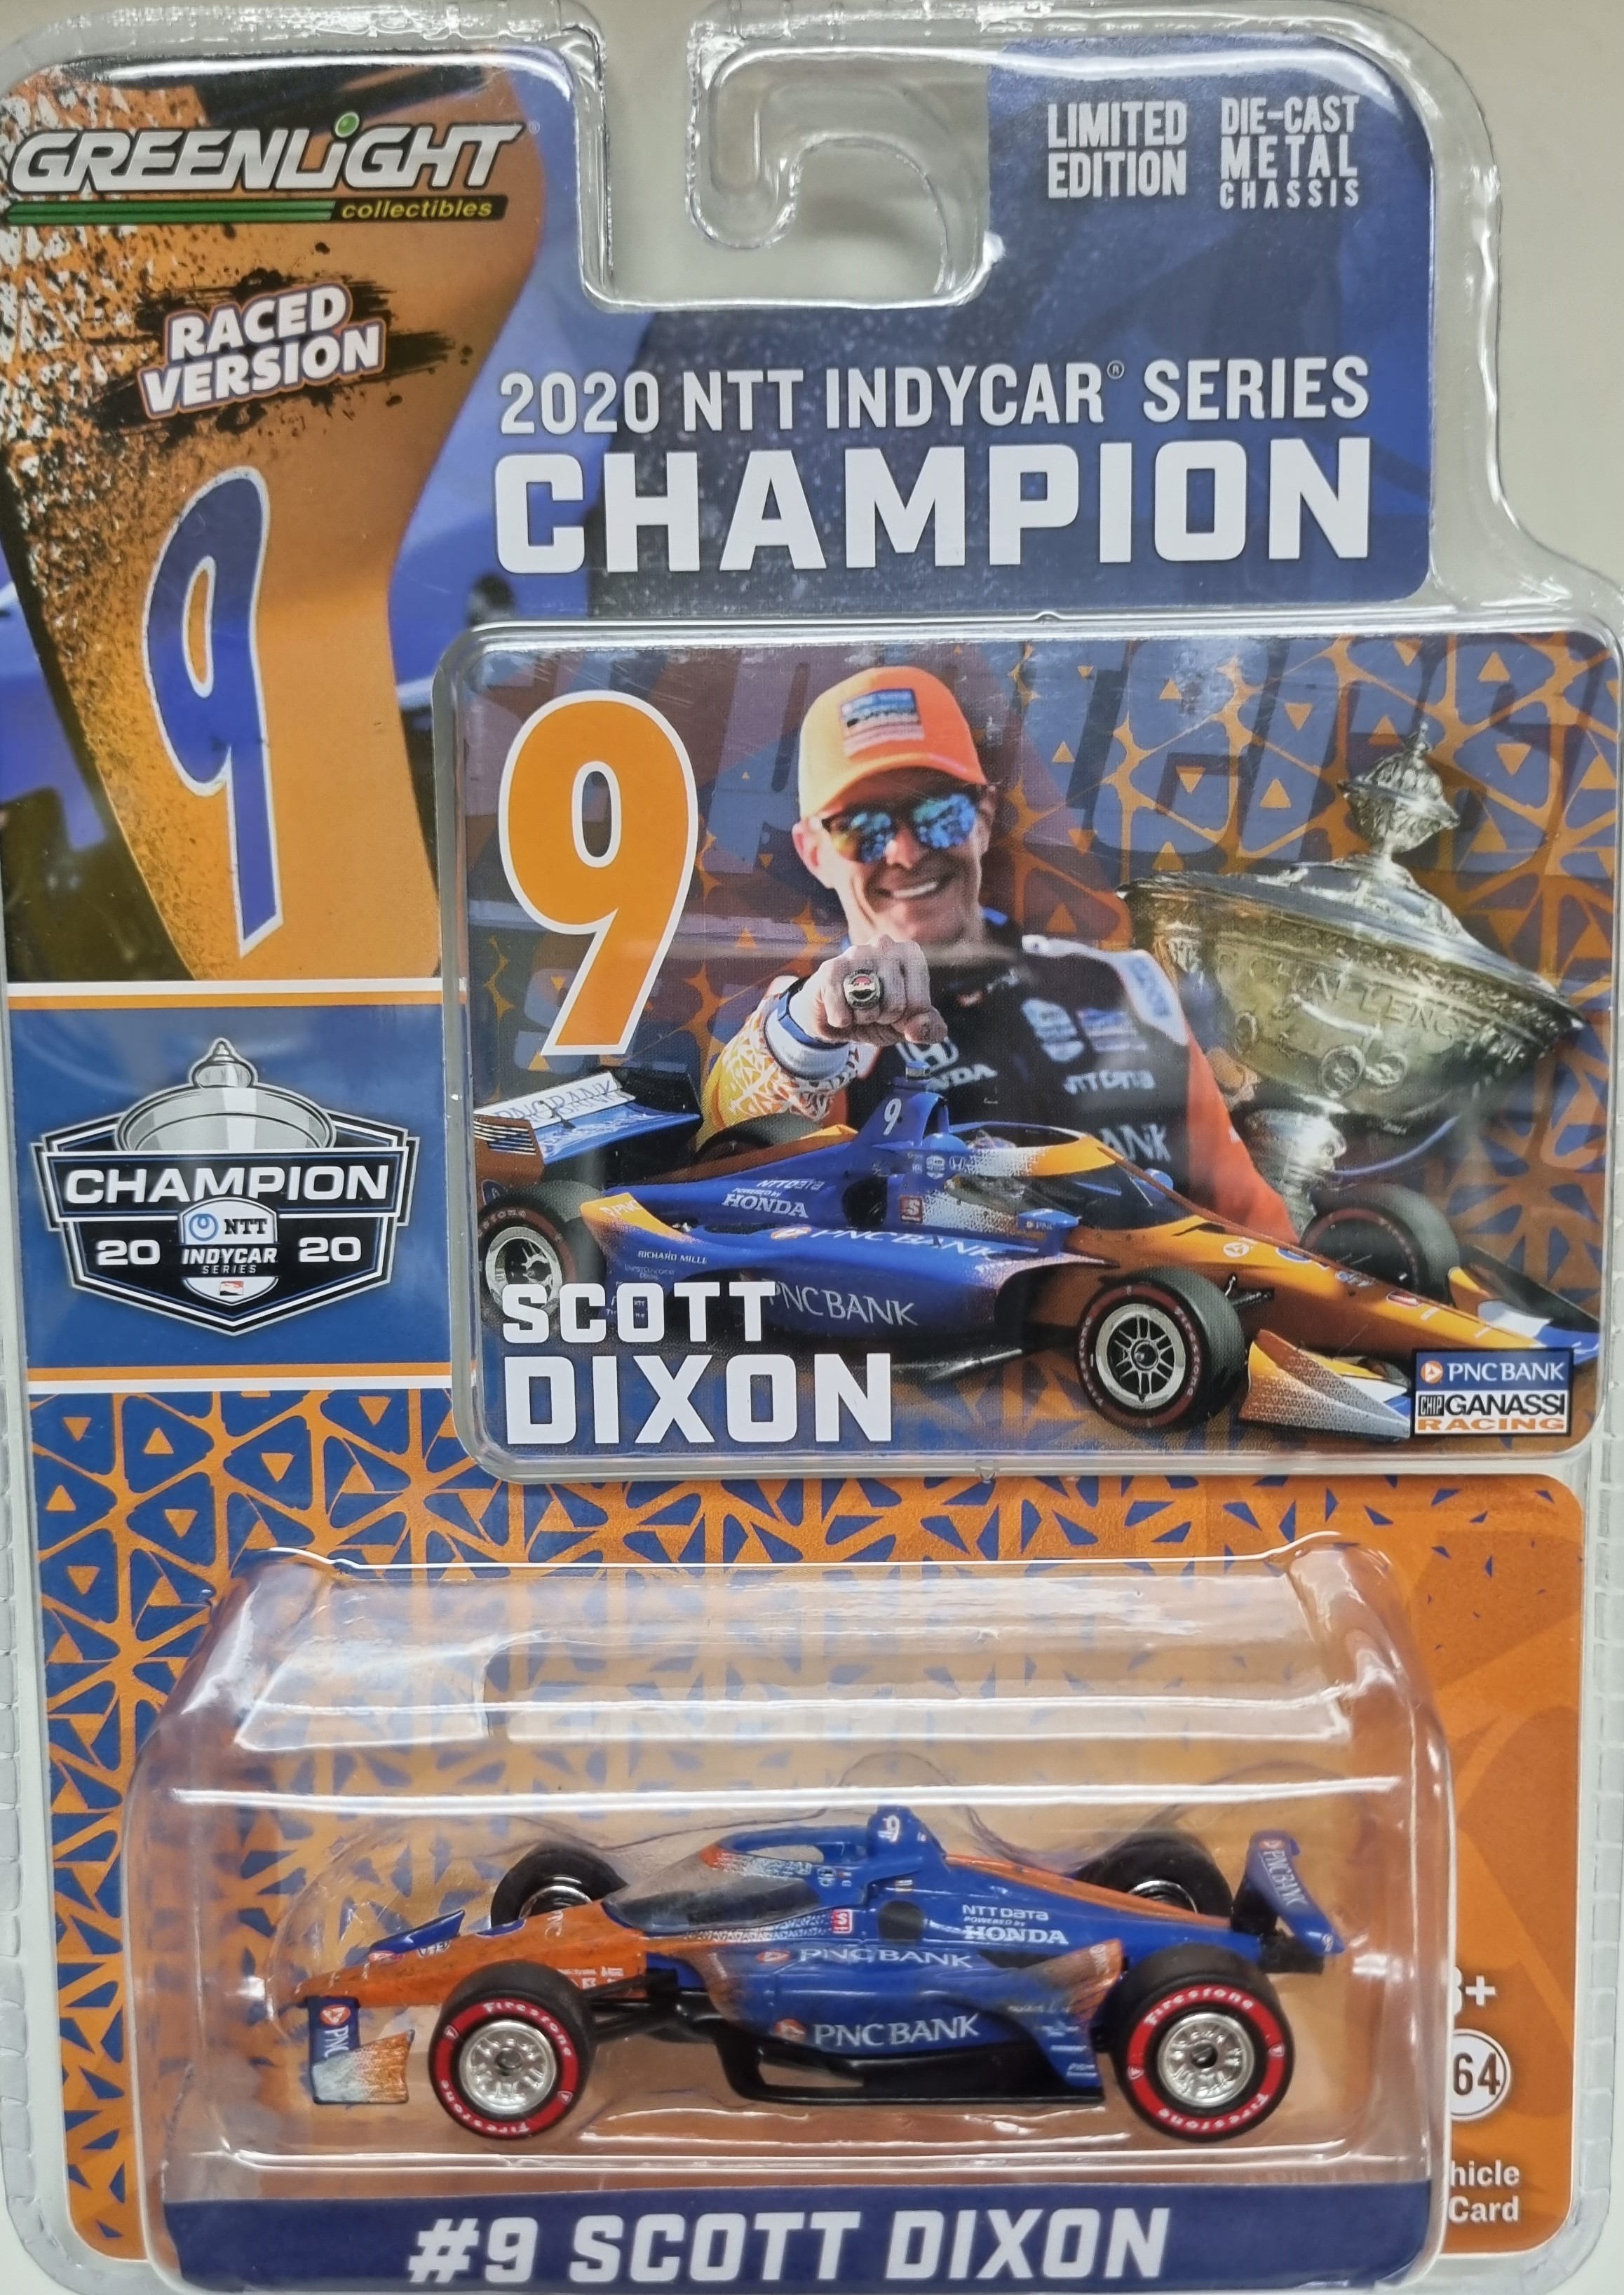 1/64 Scott Dixon 2020 IndyCar Champion Chip Ganassi PMC Bank Racing